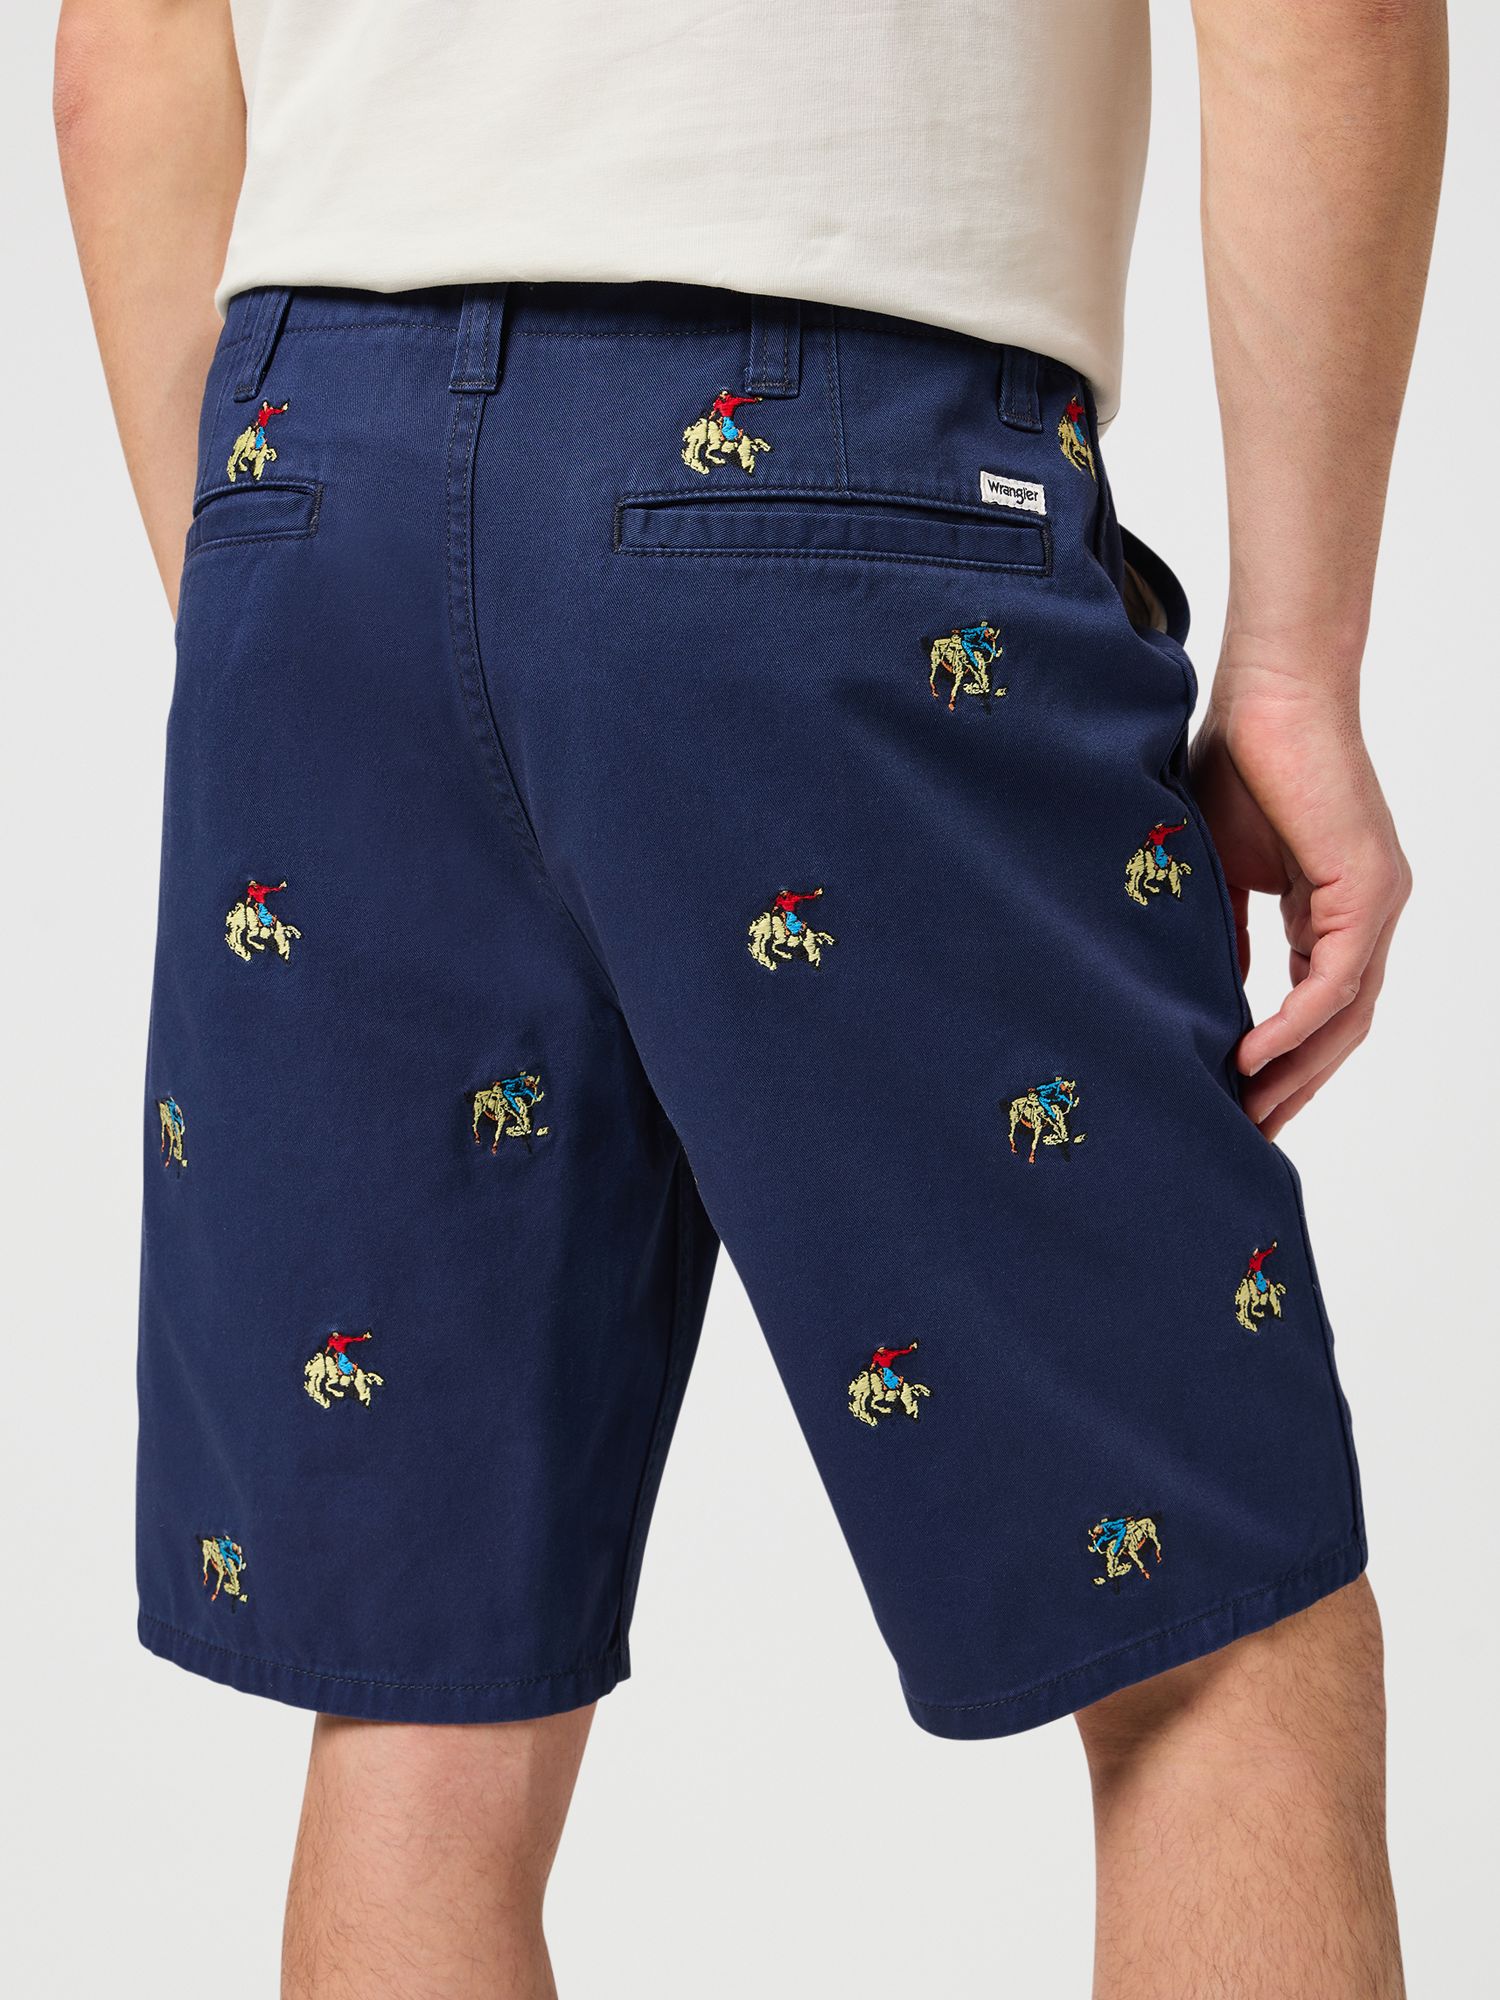 Wrangler Critter Chino Shorts, Dark Navy, 30R